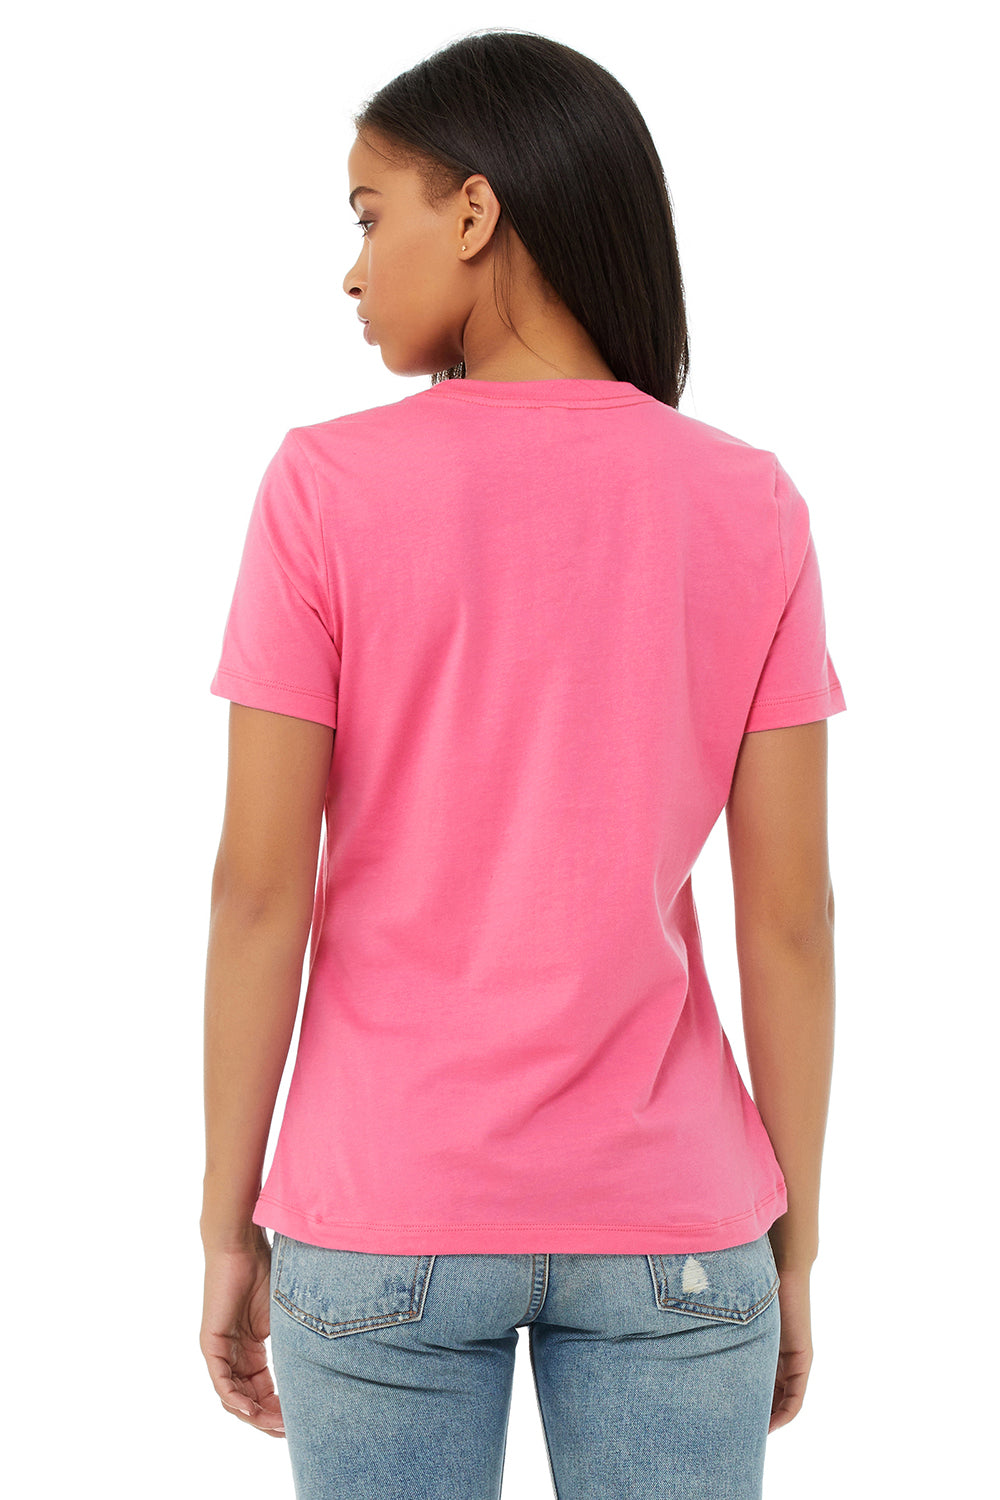 Bella + Canvas BC6400/B6400/6400 Womens Relaxed Jersey Short Sleeve Crewneck T-Shirt Charity Pink Model Back